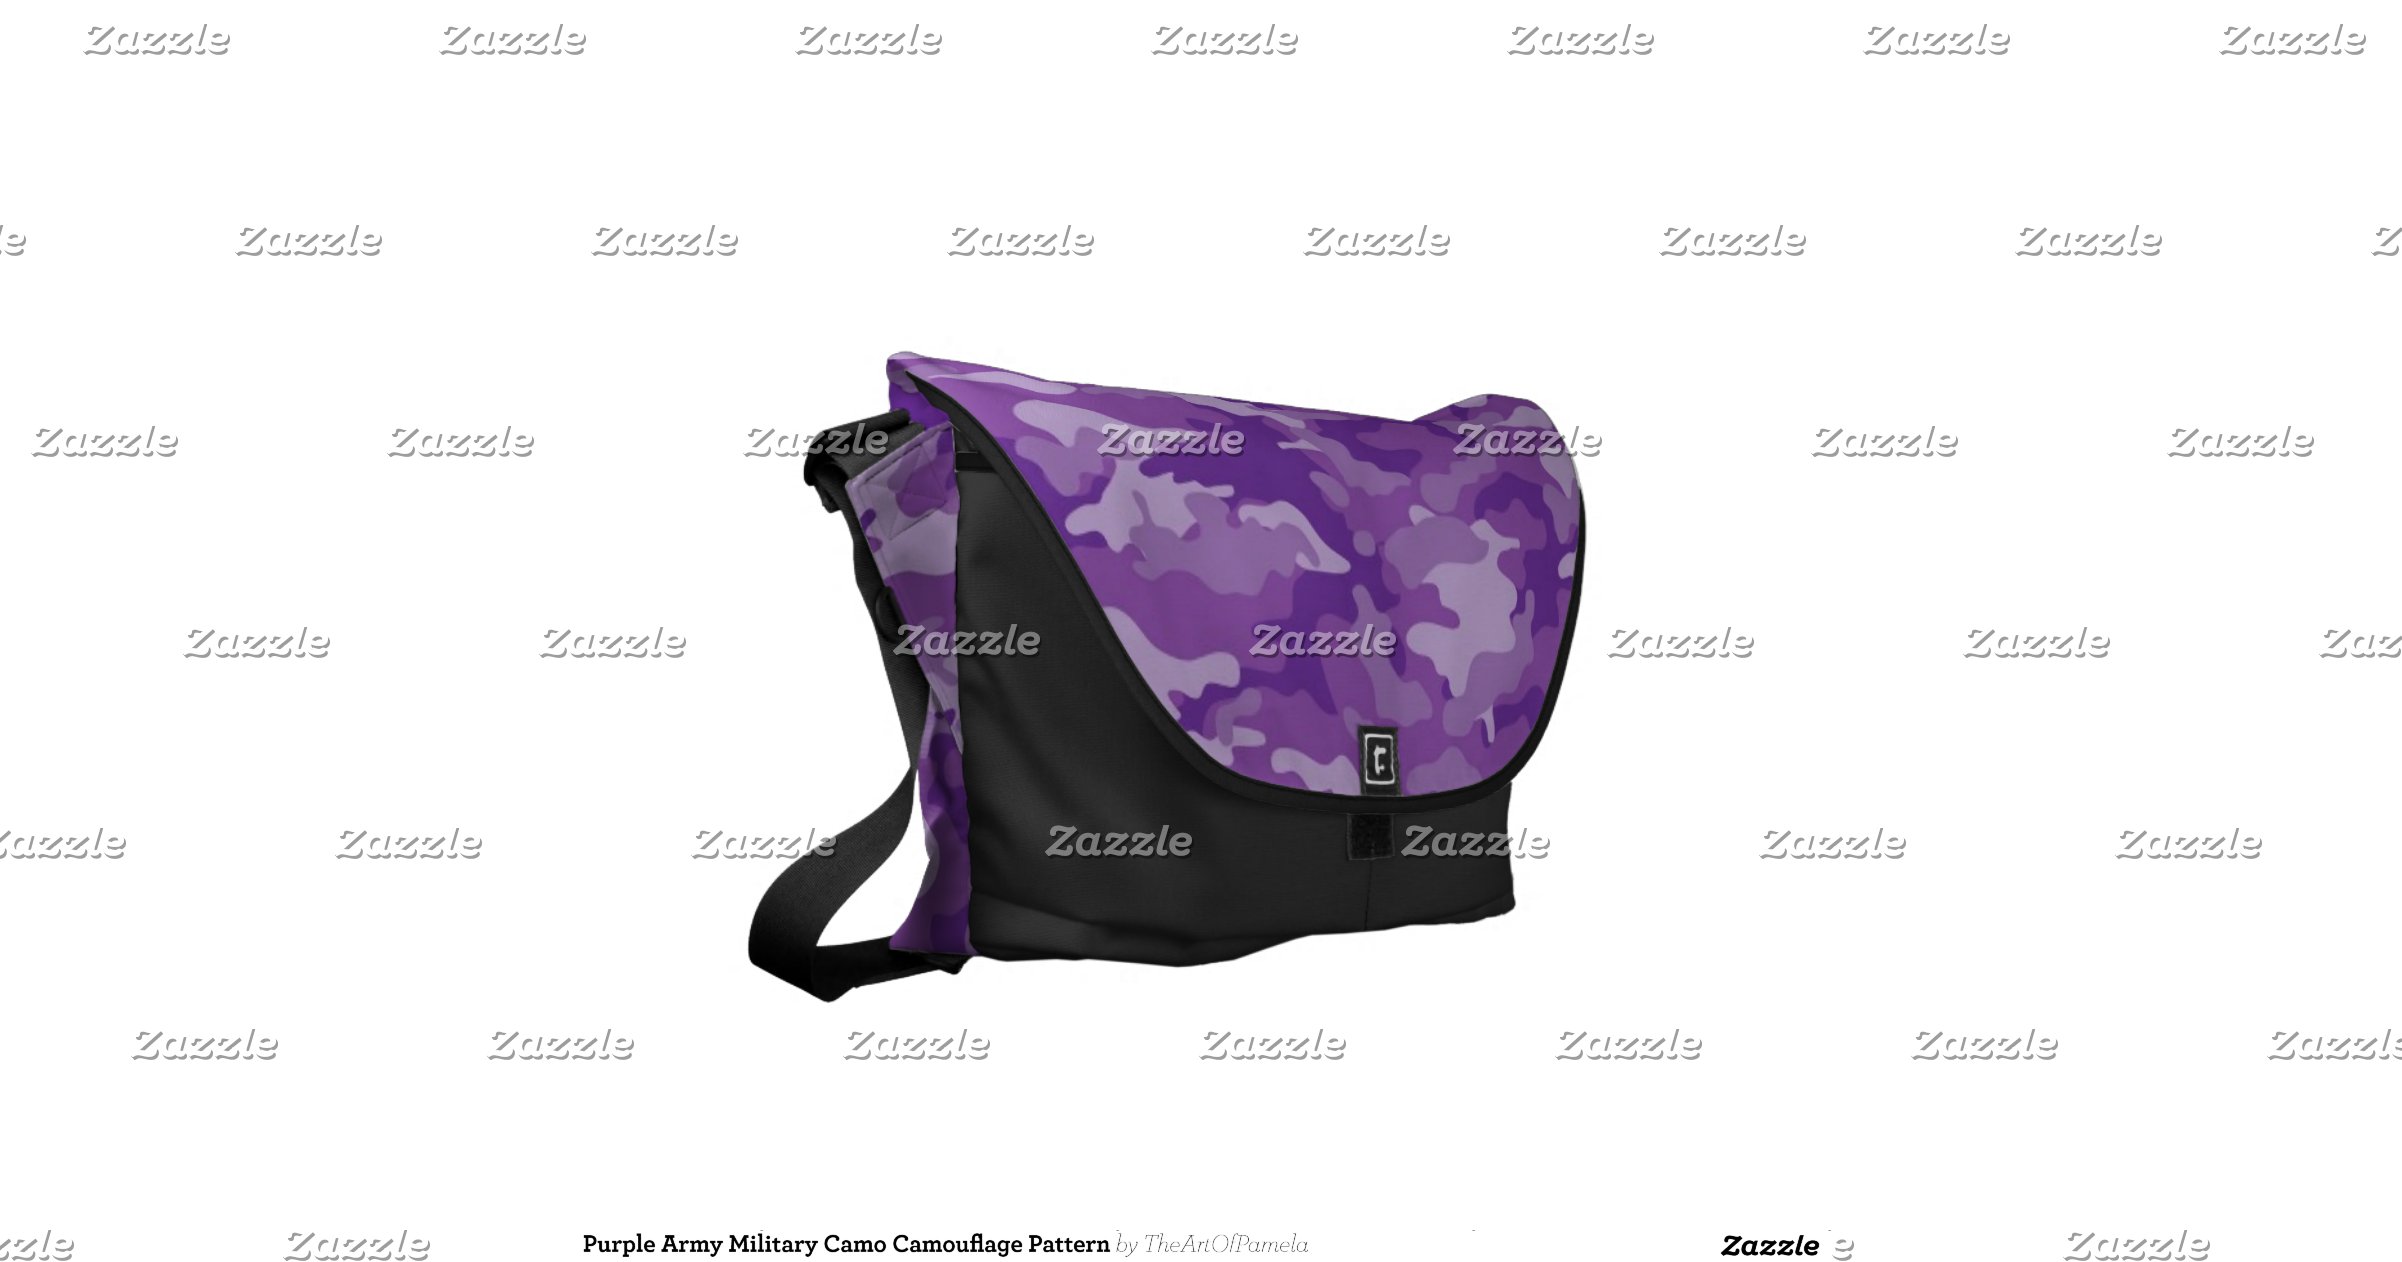 Purple Army Military Camo Camouflage Pattern Messenger Bag | Zazzle